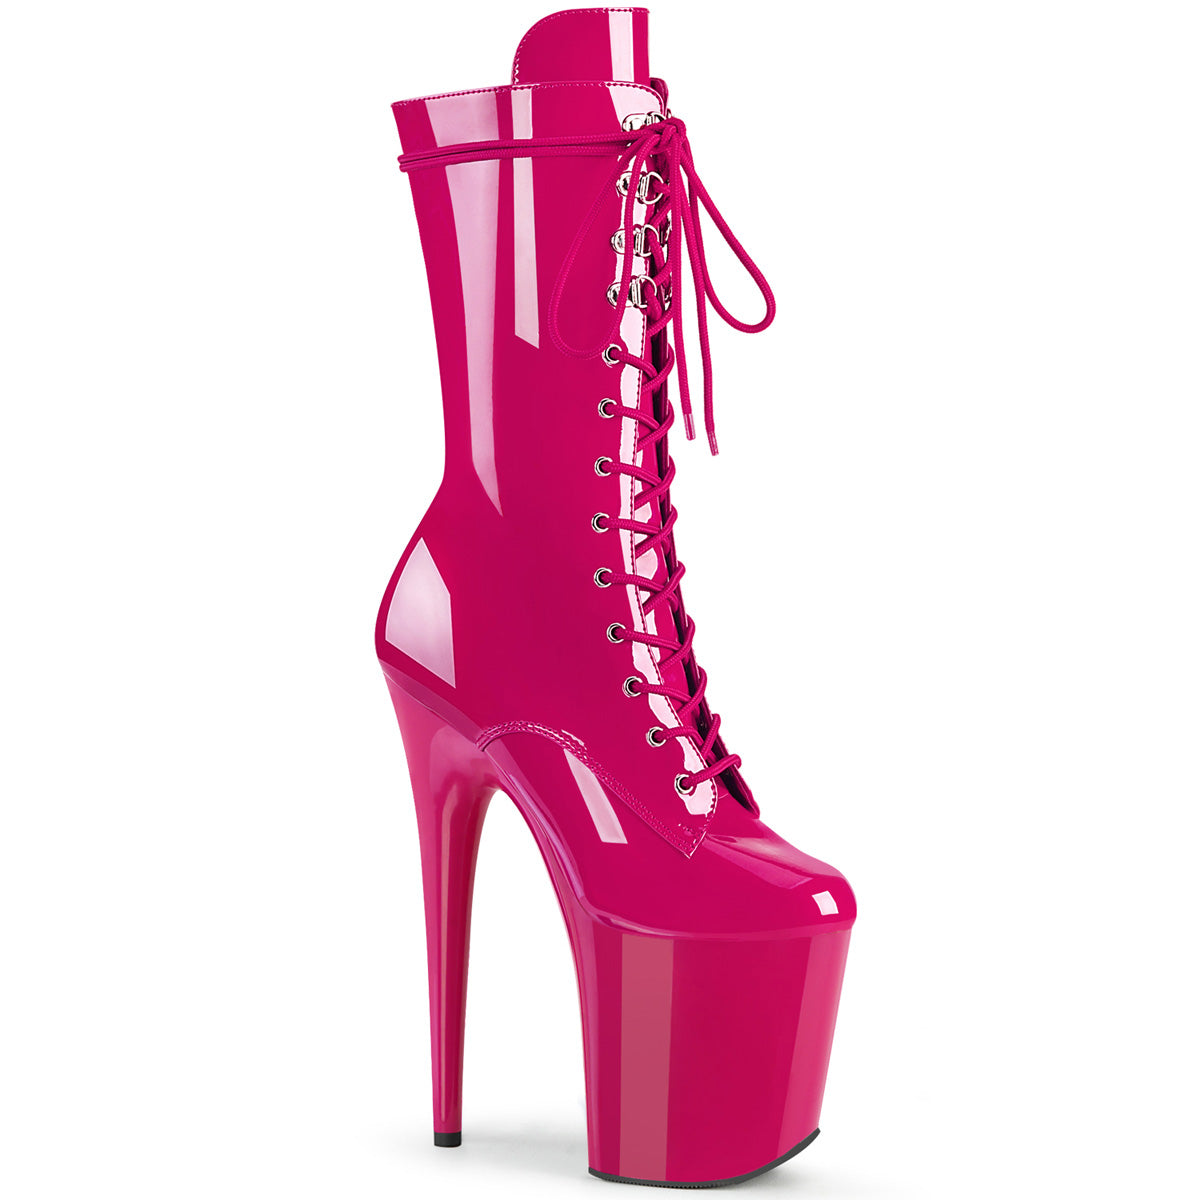 FLAMINGO-1050 8" Heel Hot Pink Patent  Stripper Platforms High Heels